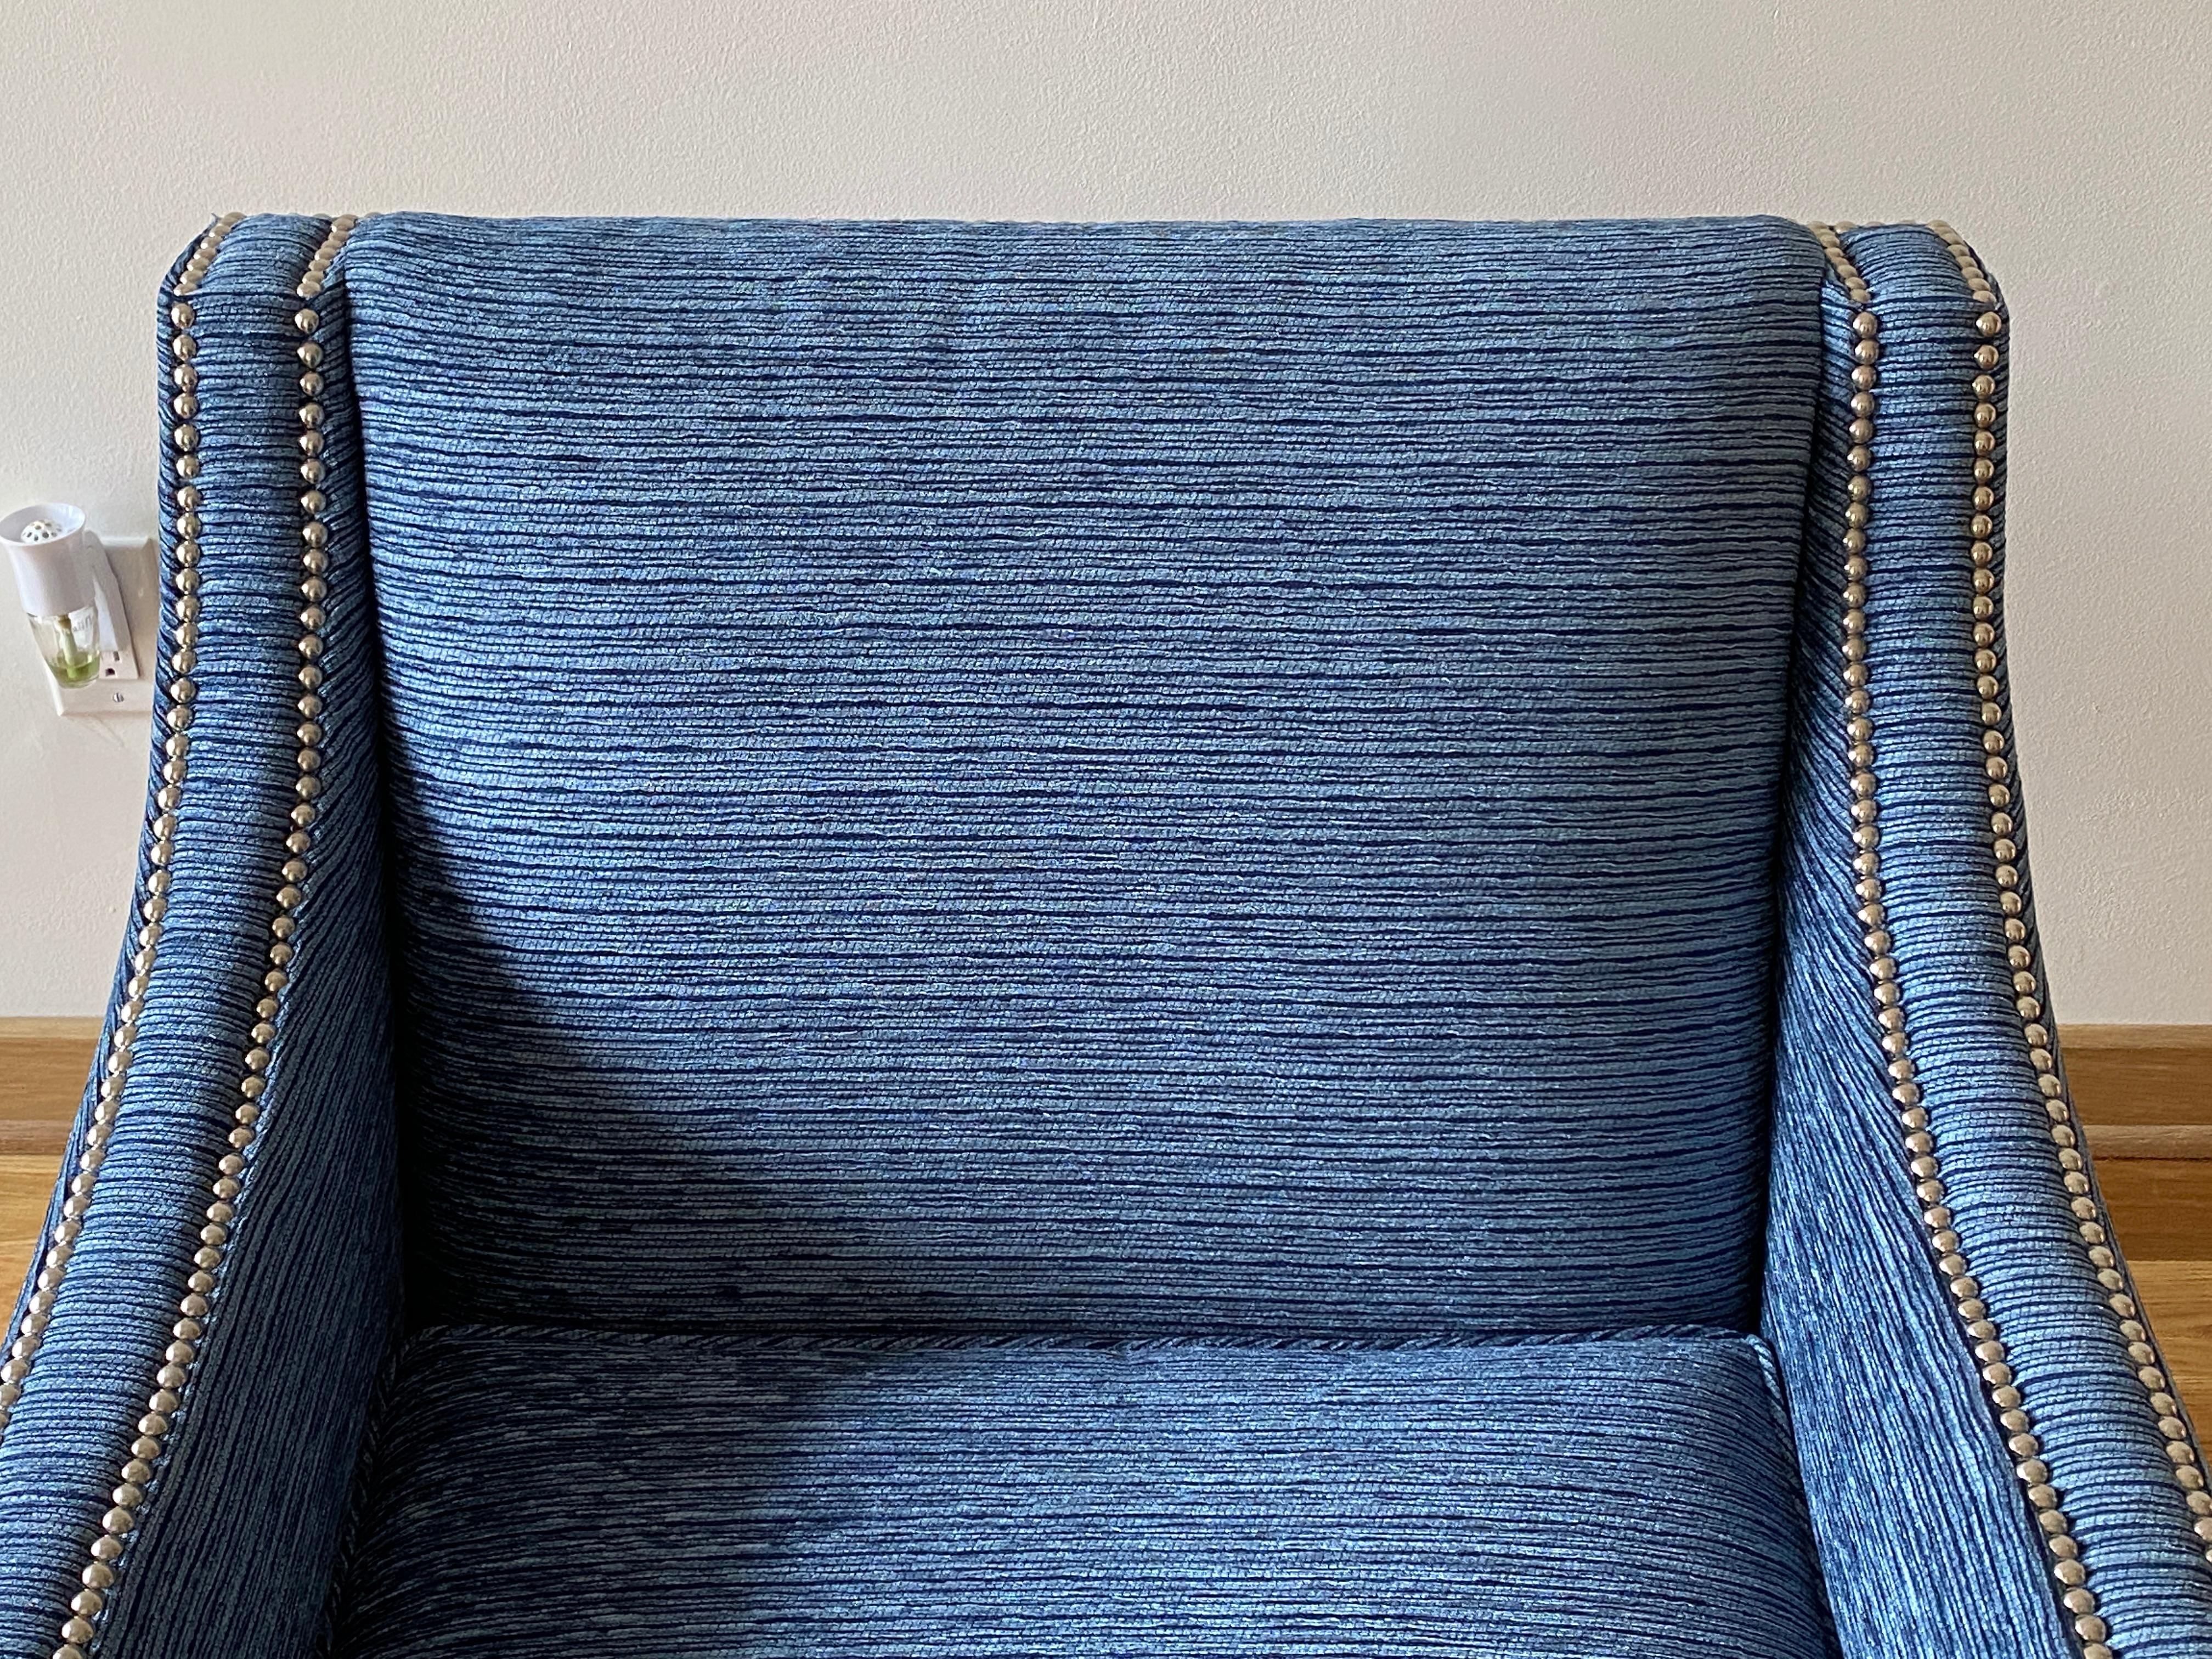 American Modern Club Chairs in Blue Performance Fabric with Nickel Nailhead Trim, Pair